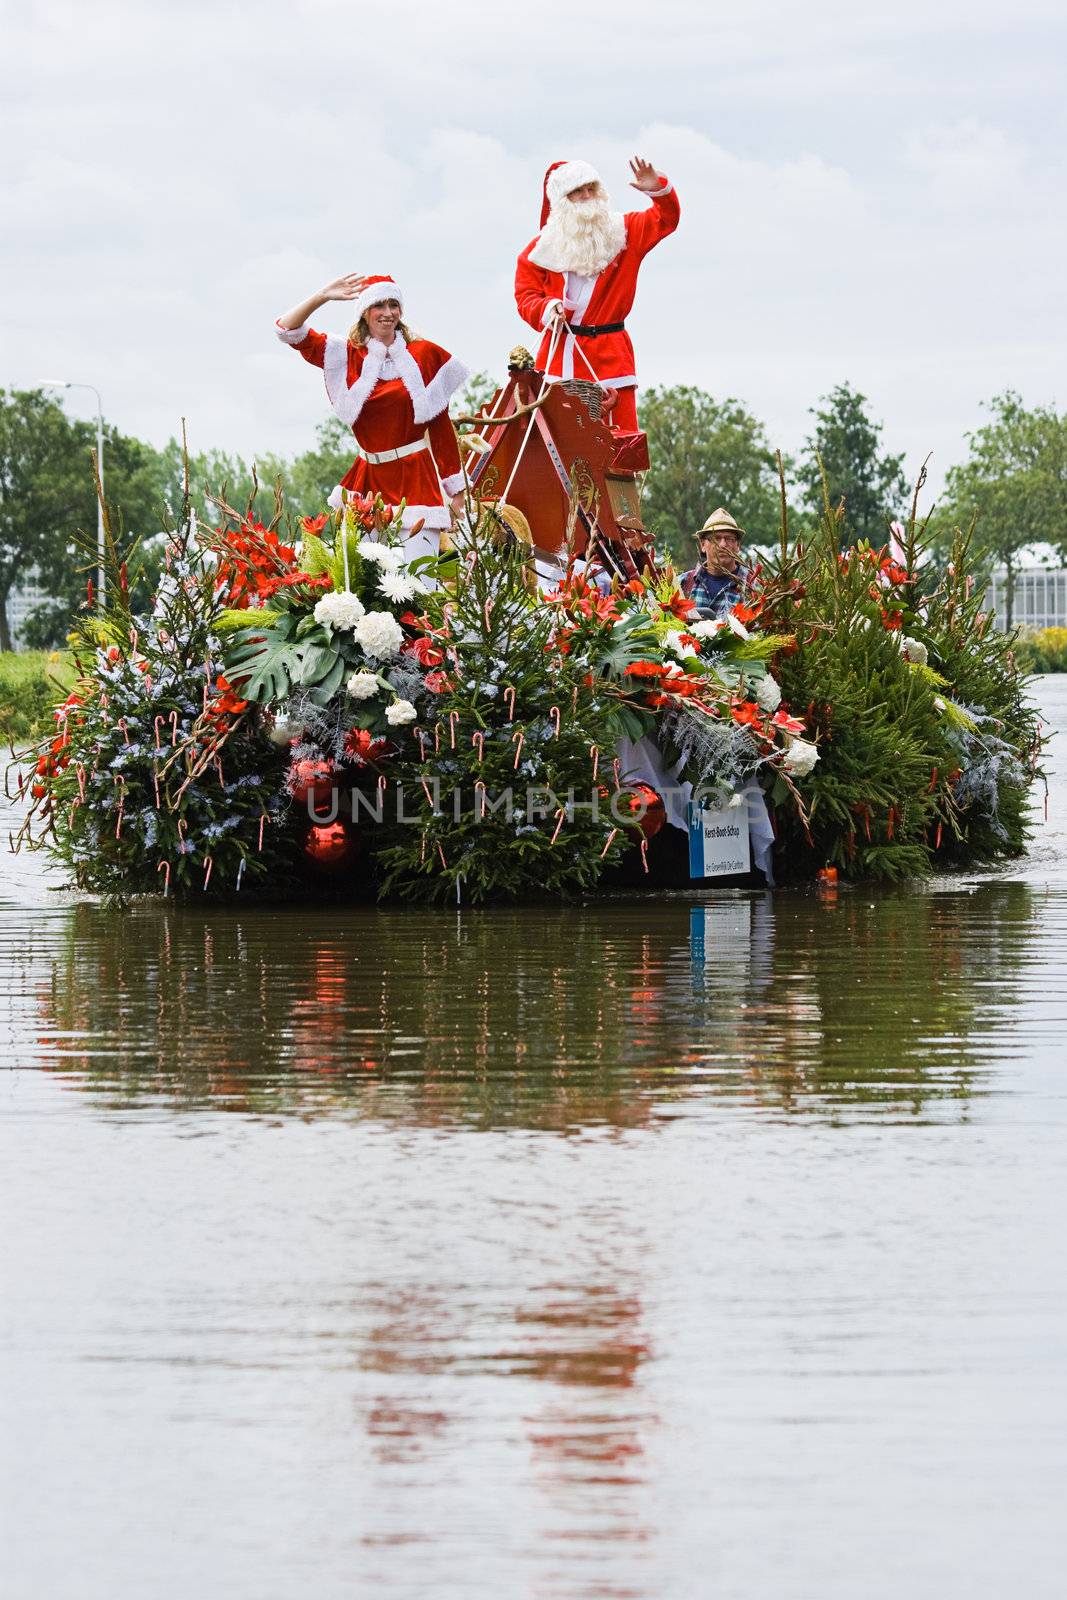 Westland Floating Flower Parade 2009, The Netherlands by Colette